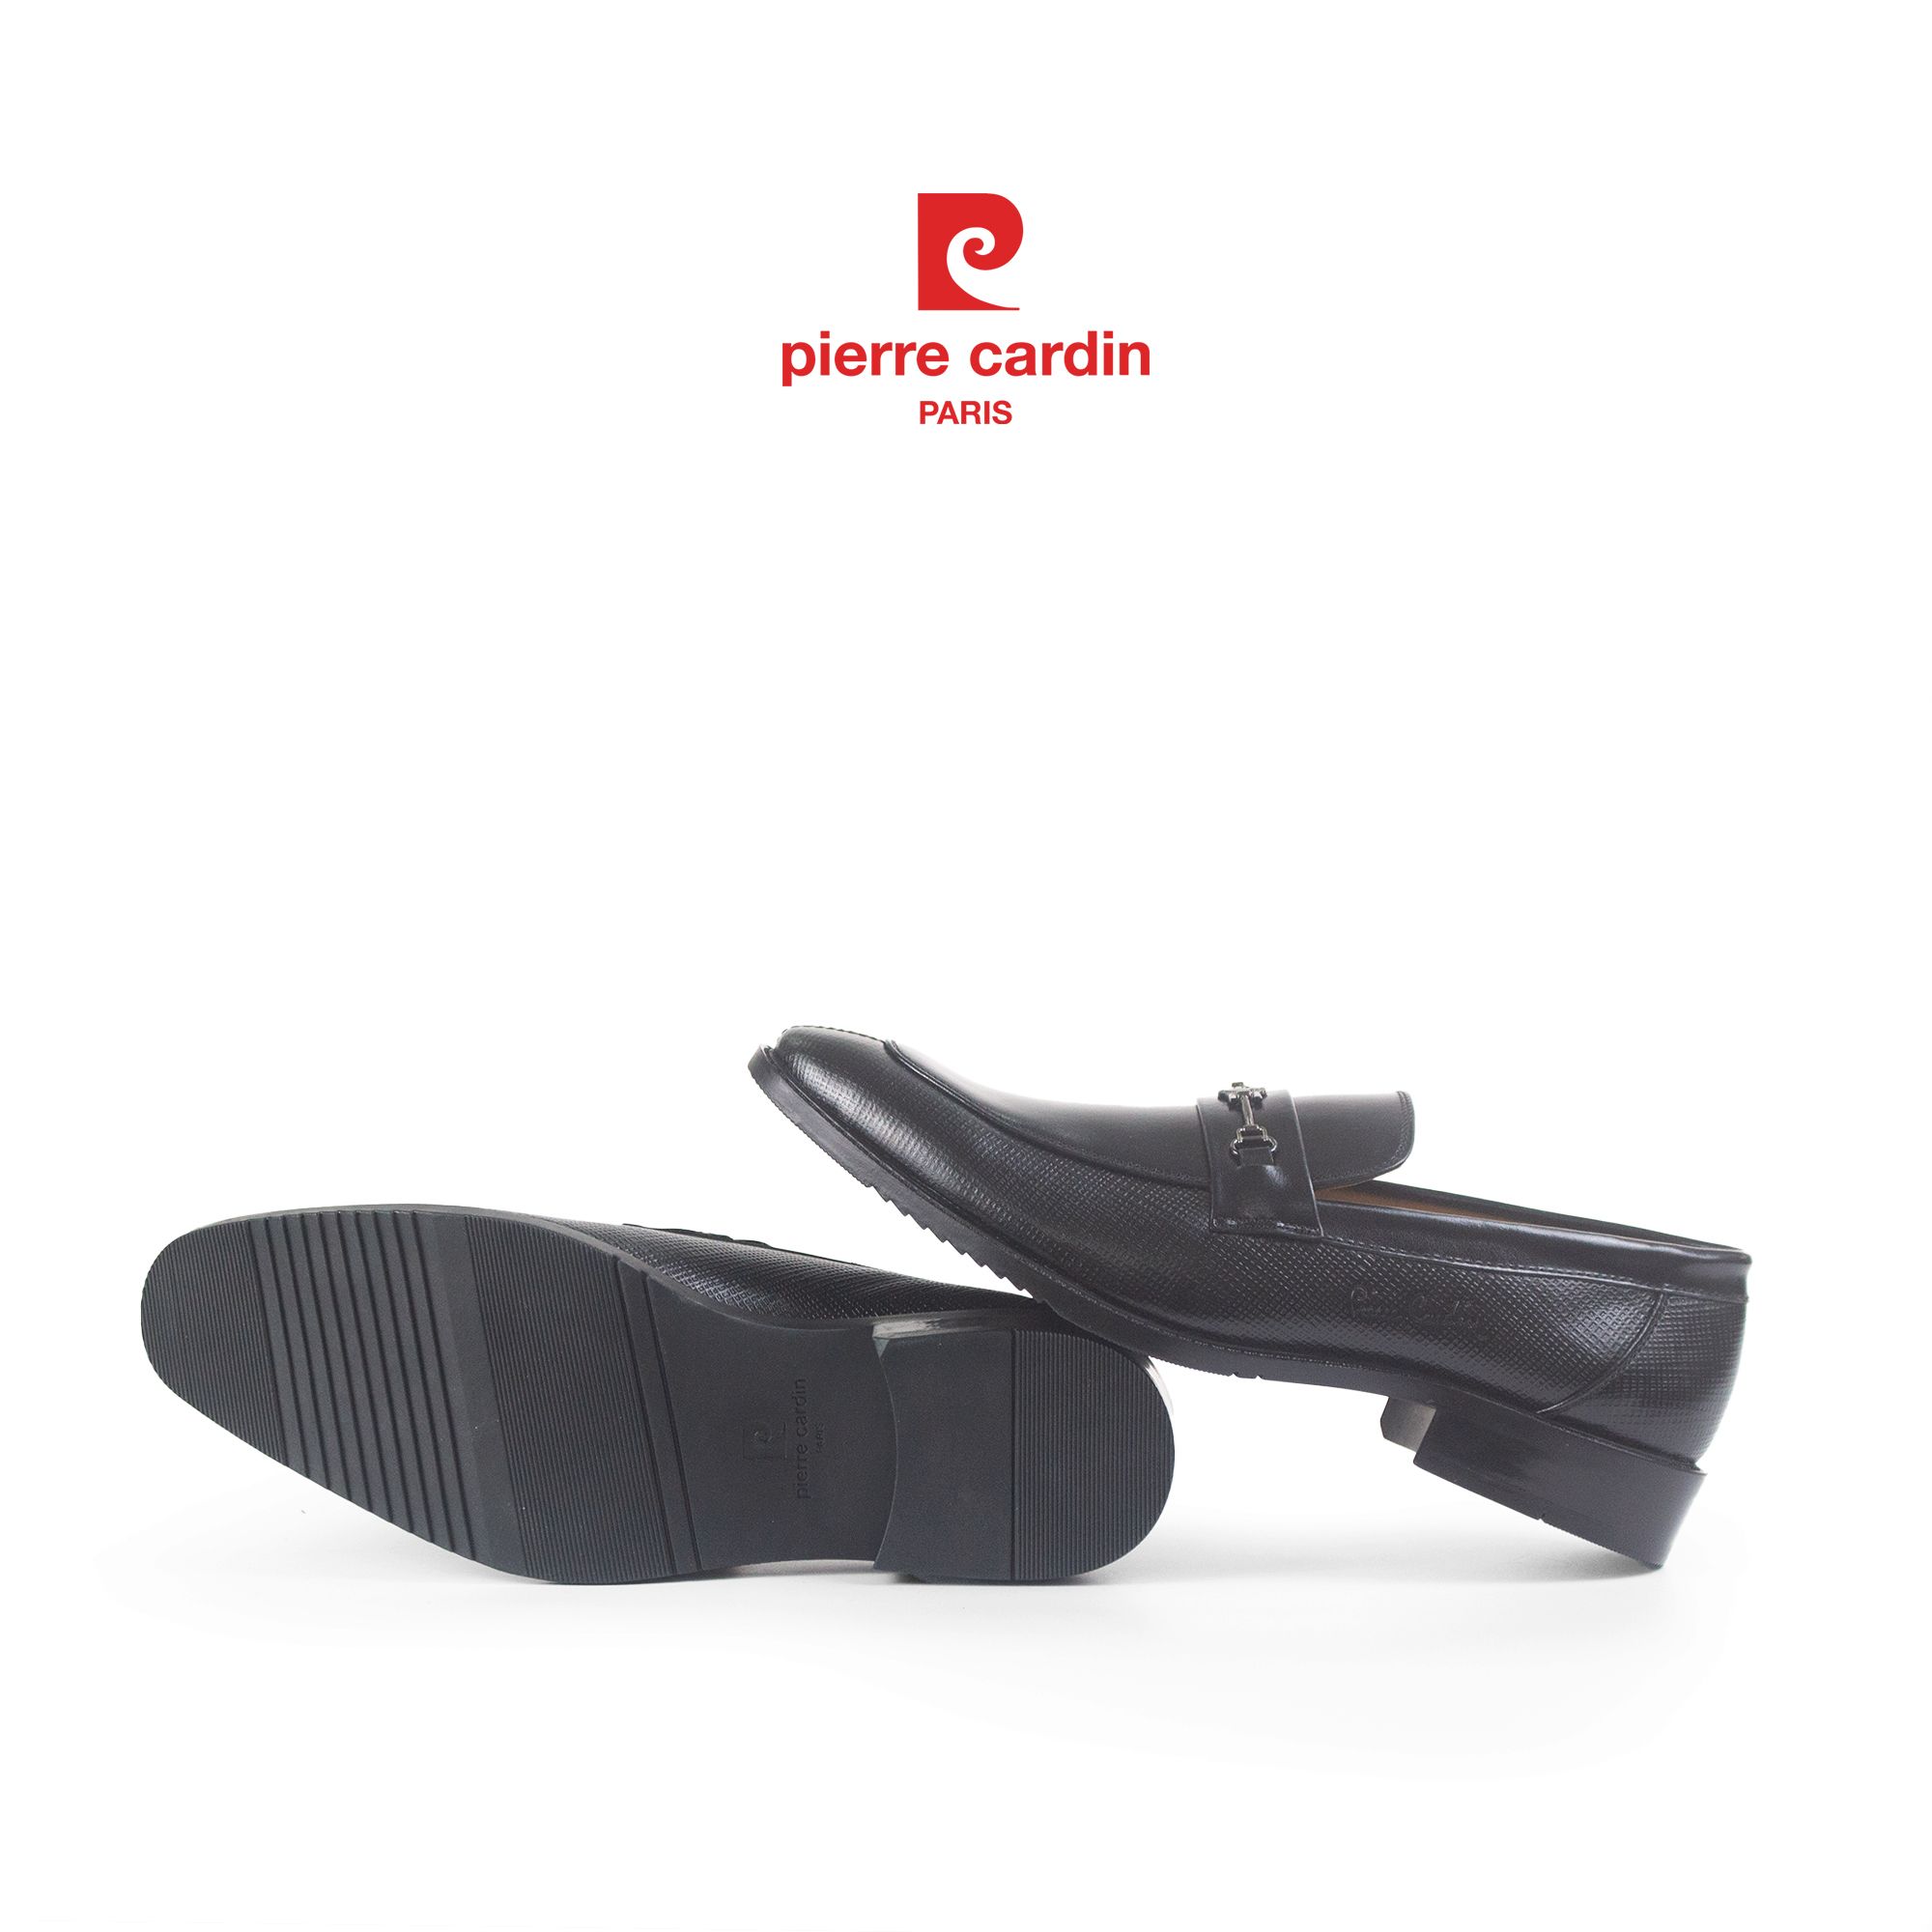 Pierre Cardin Paris Vietnam: Giày Horsebit Loafer Cao Cấp Pierre Cardin - PCMFWLI 793 (BLACK)